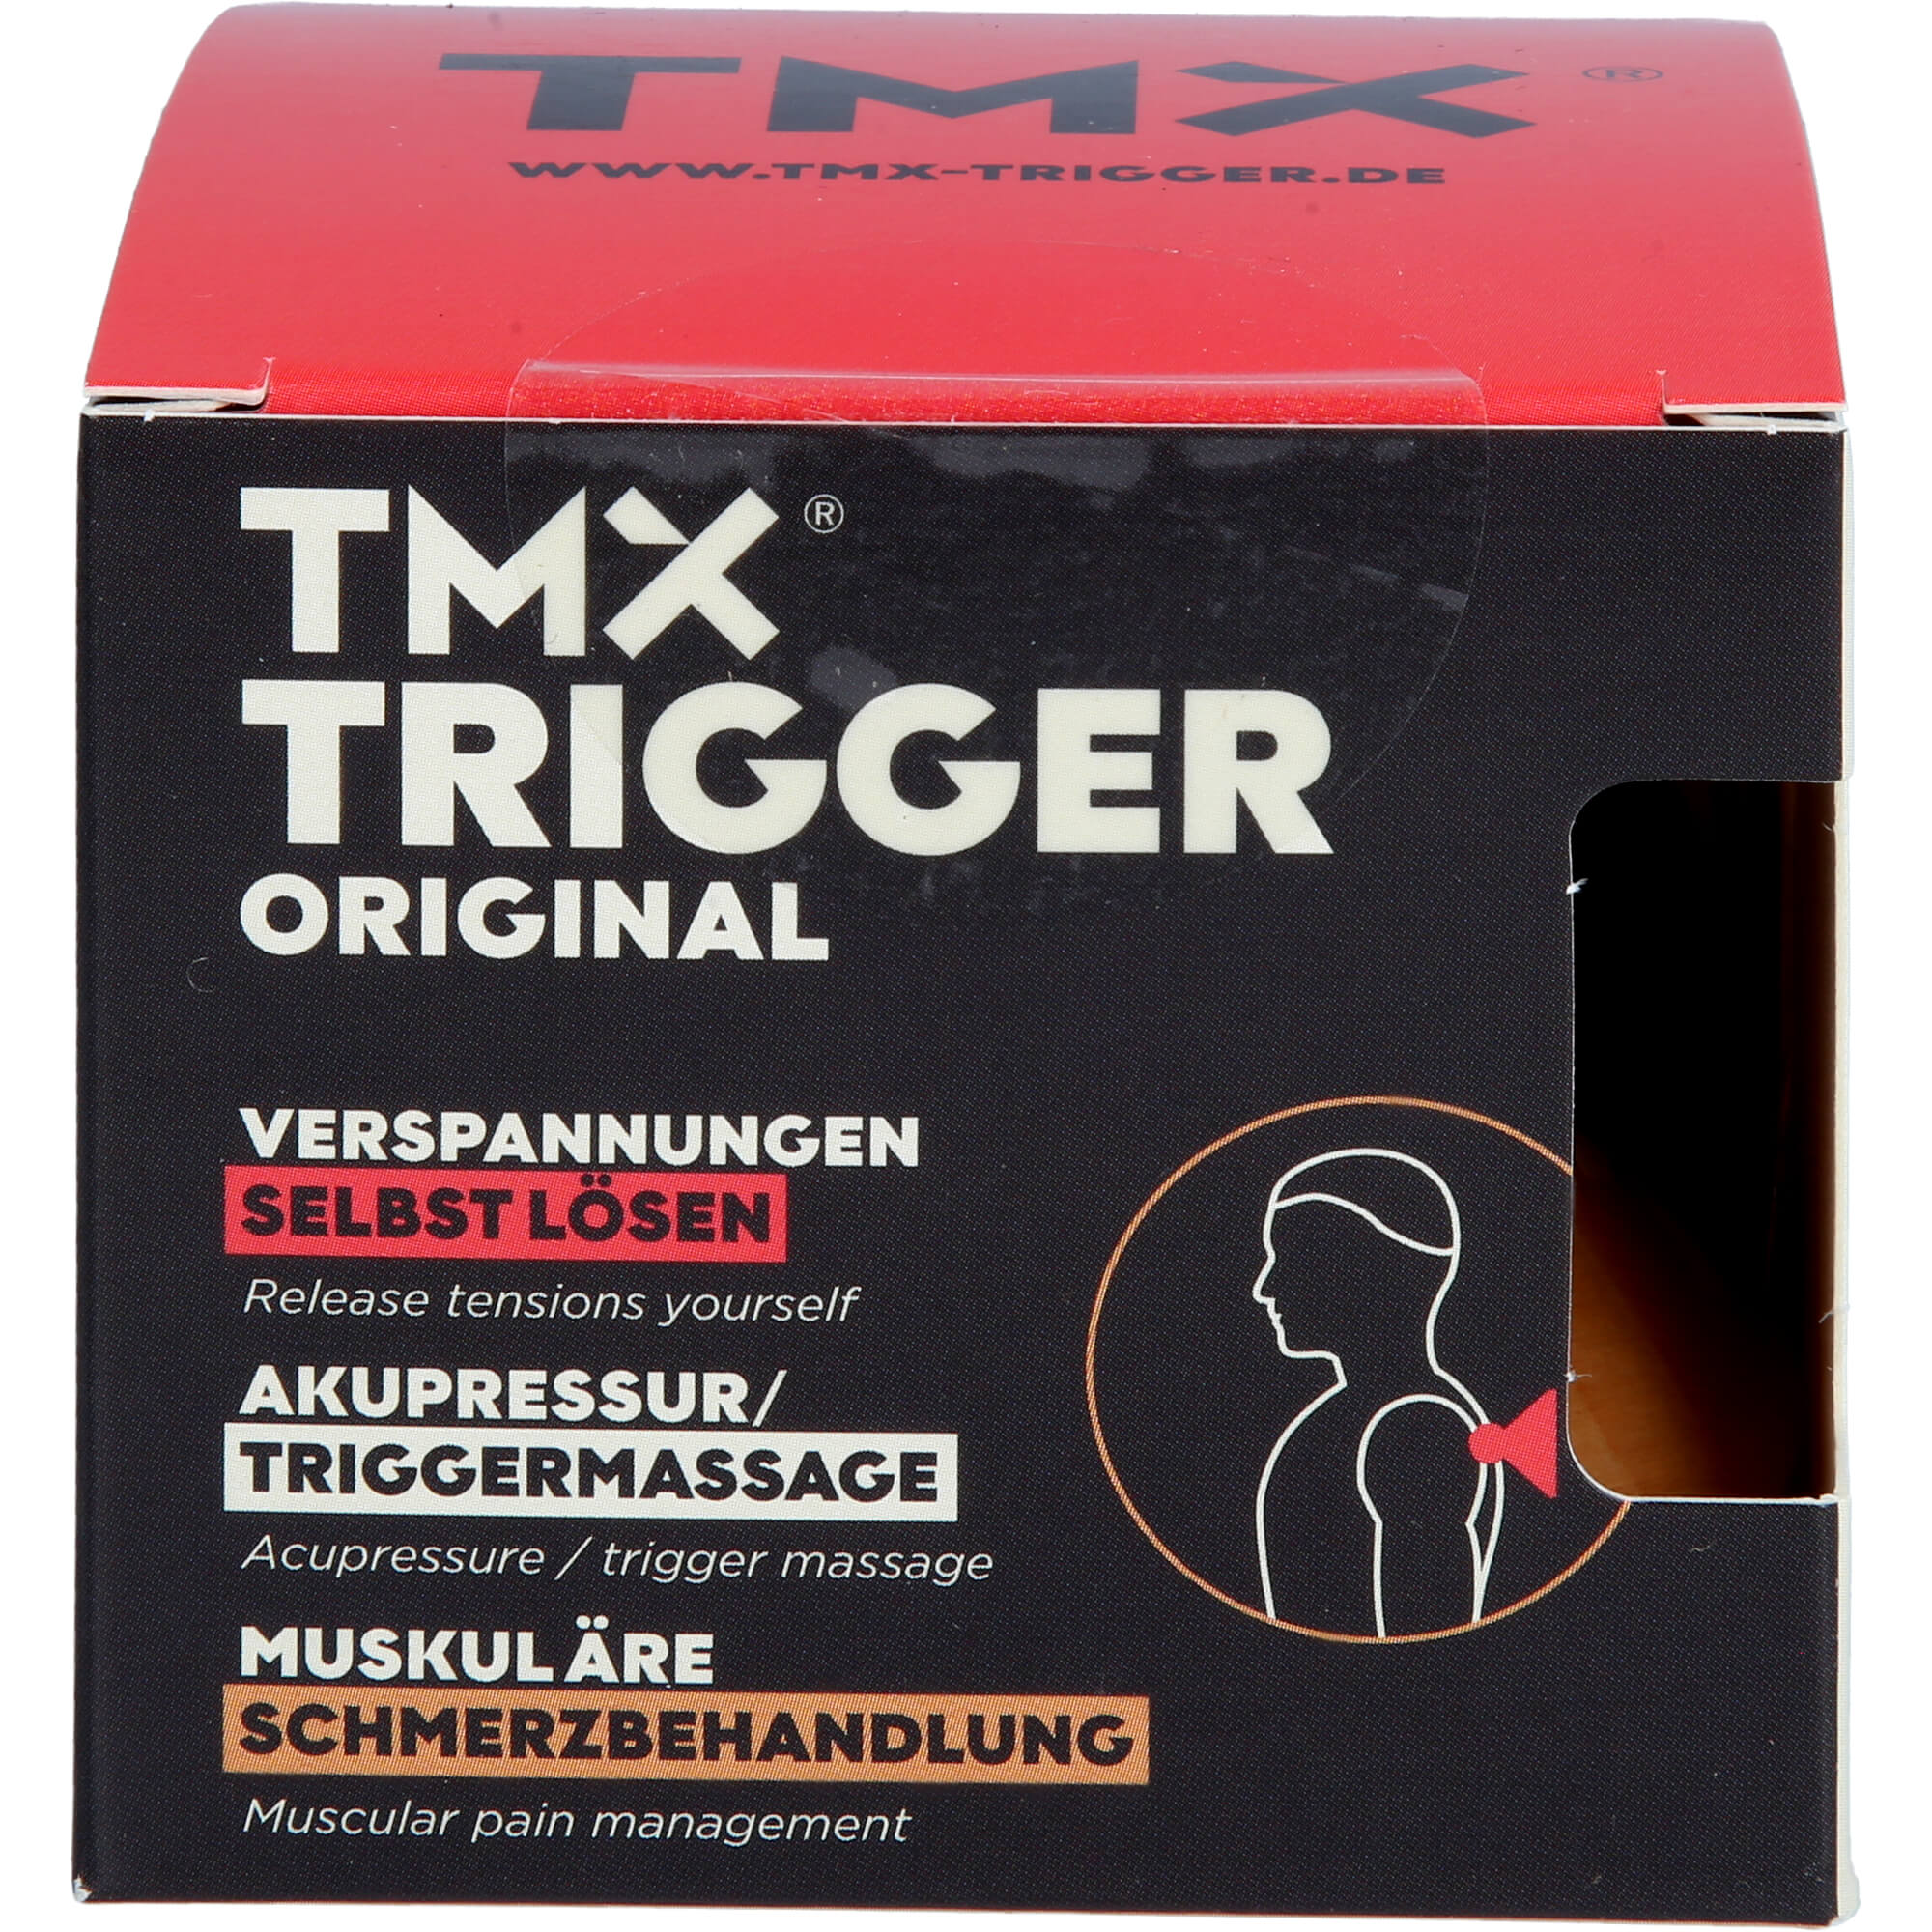 TMX Trigger Original buche